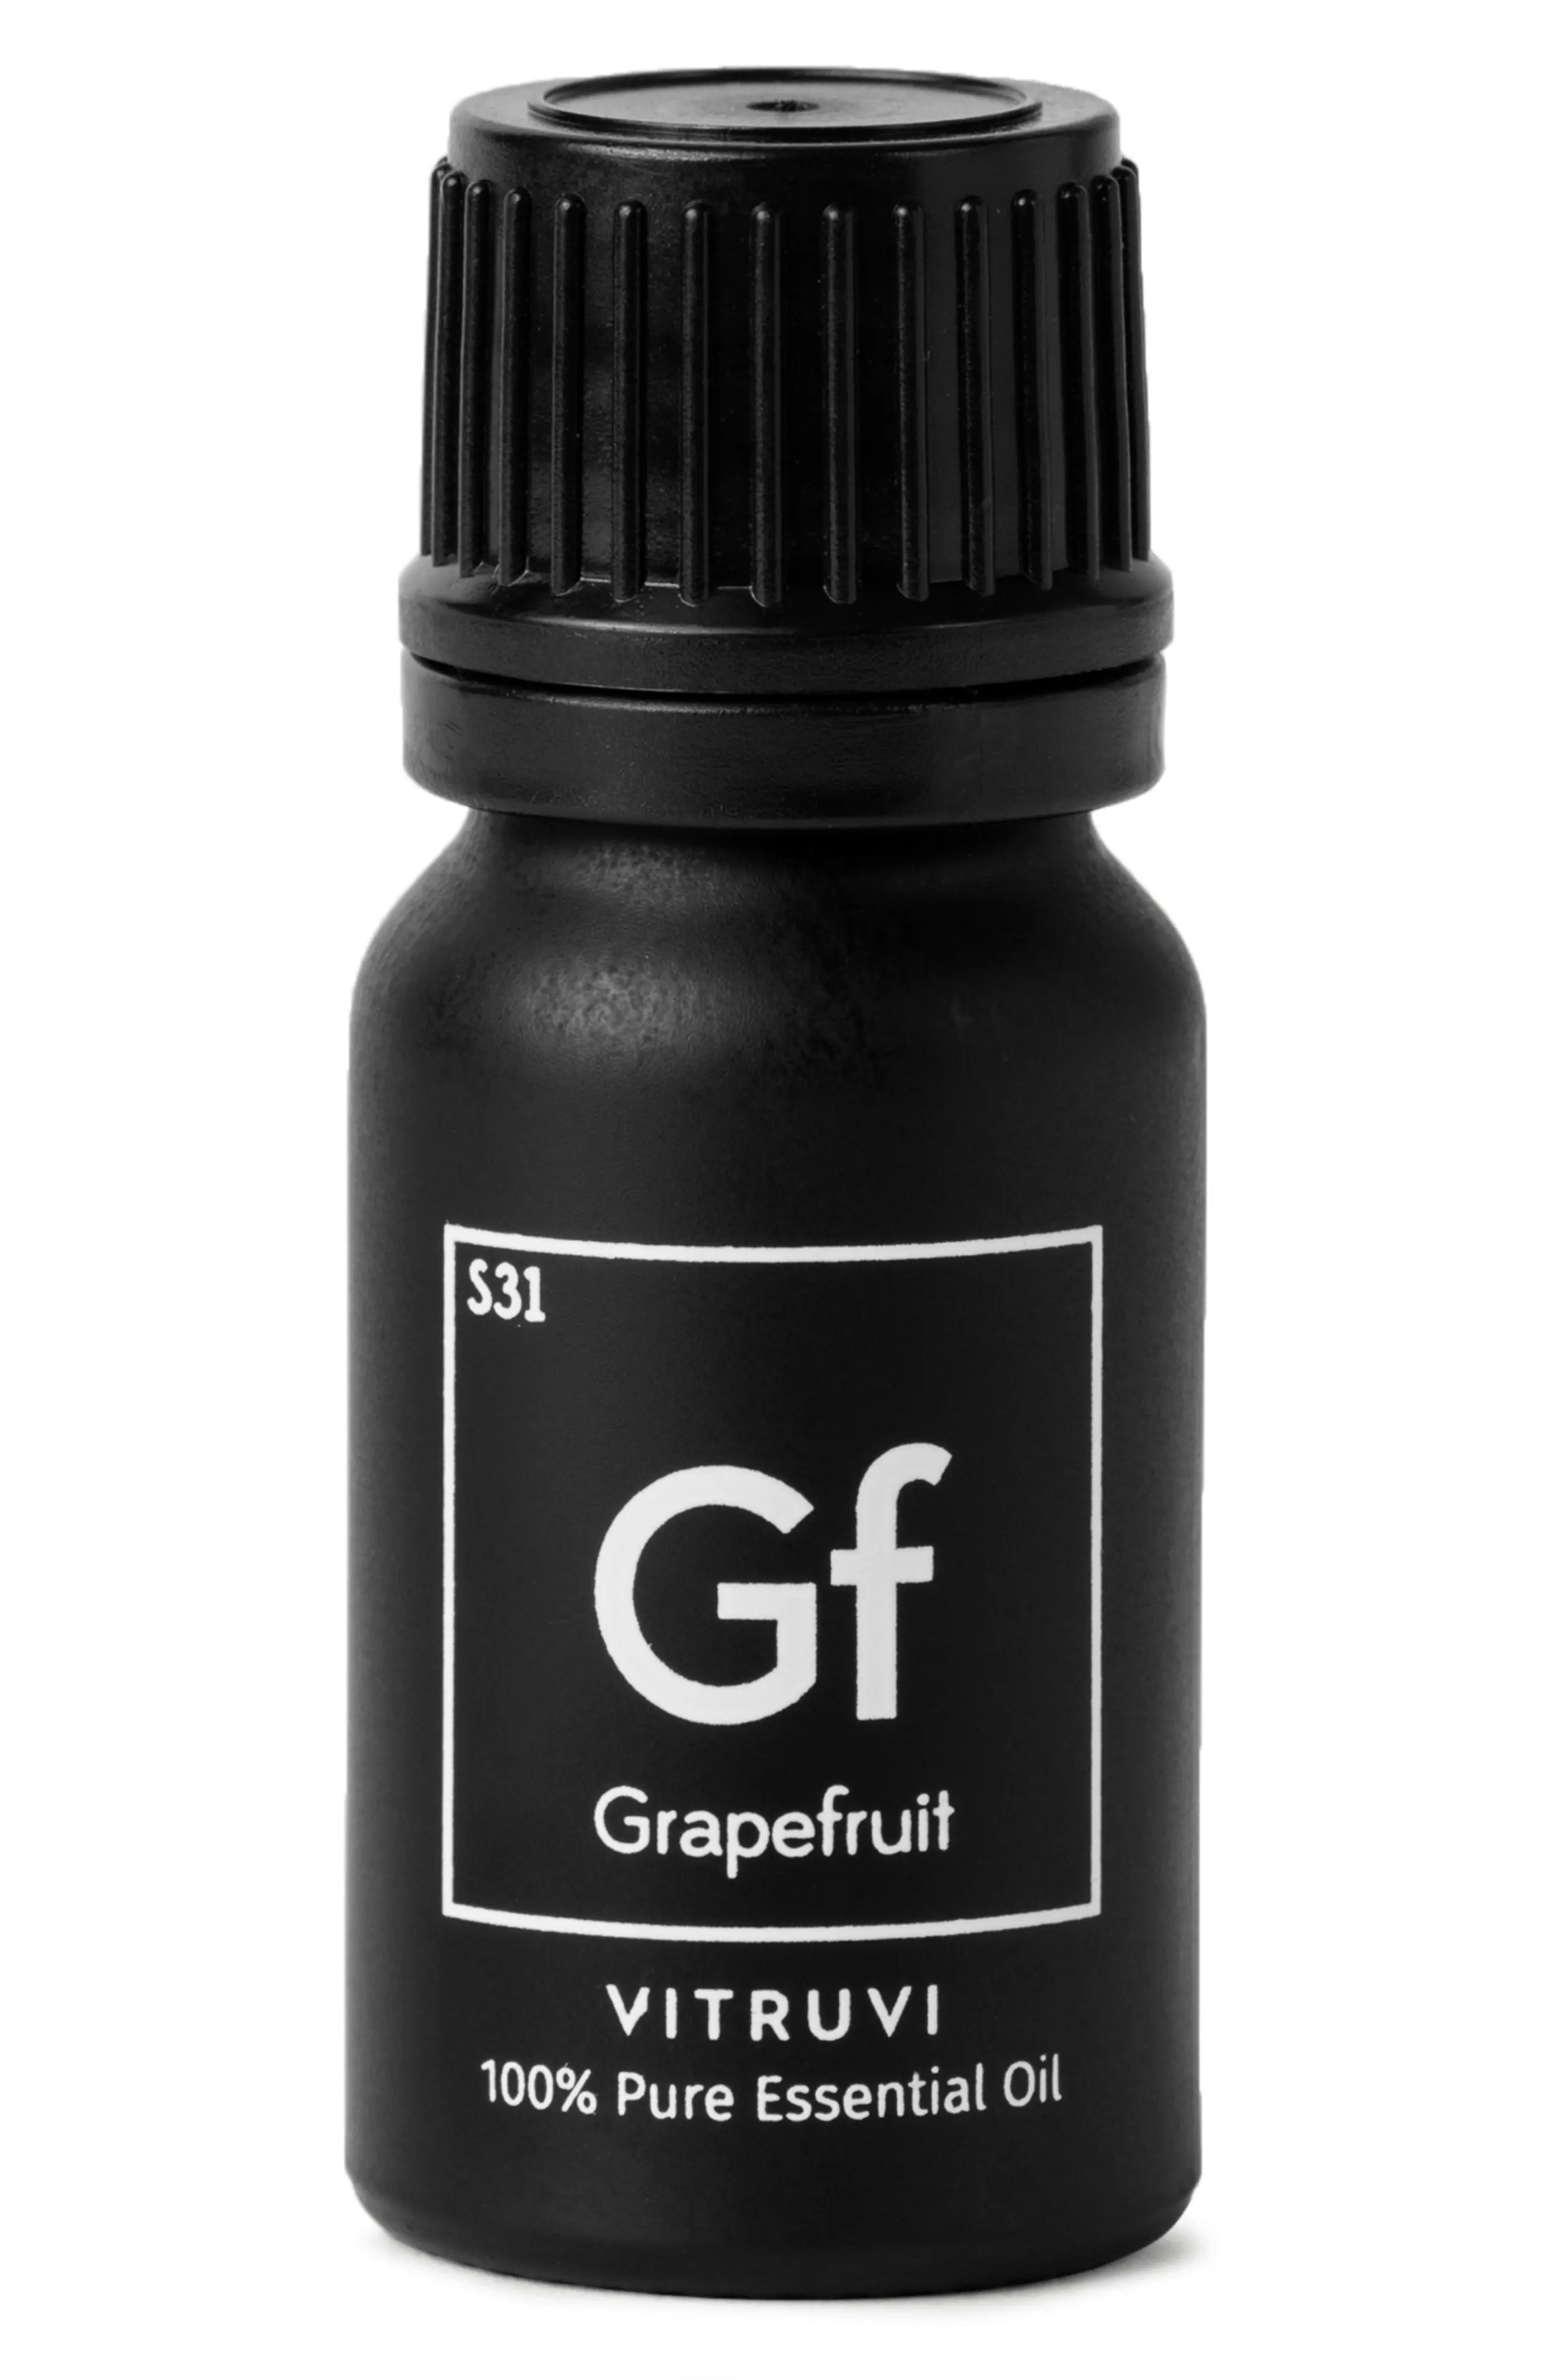 Vitruvi Grapefruit Essential Oil | Nordstrom